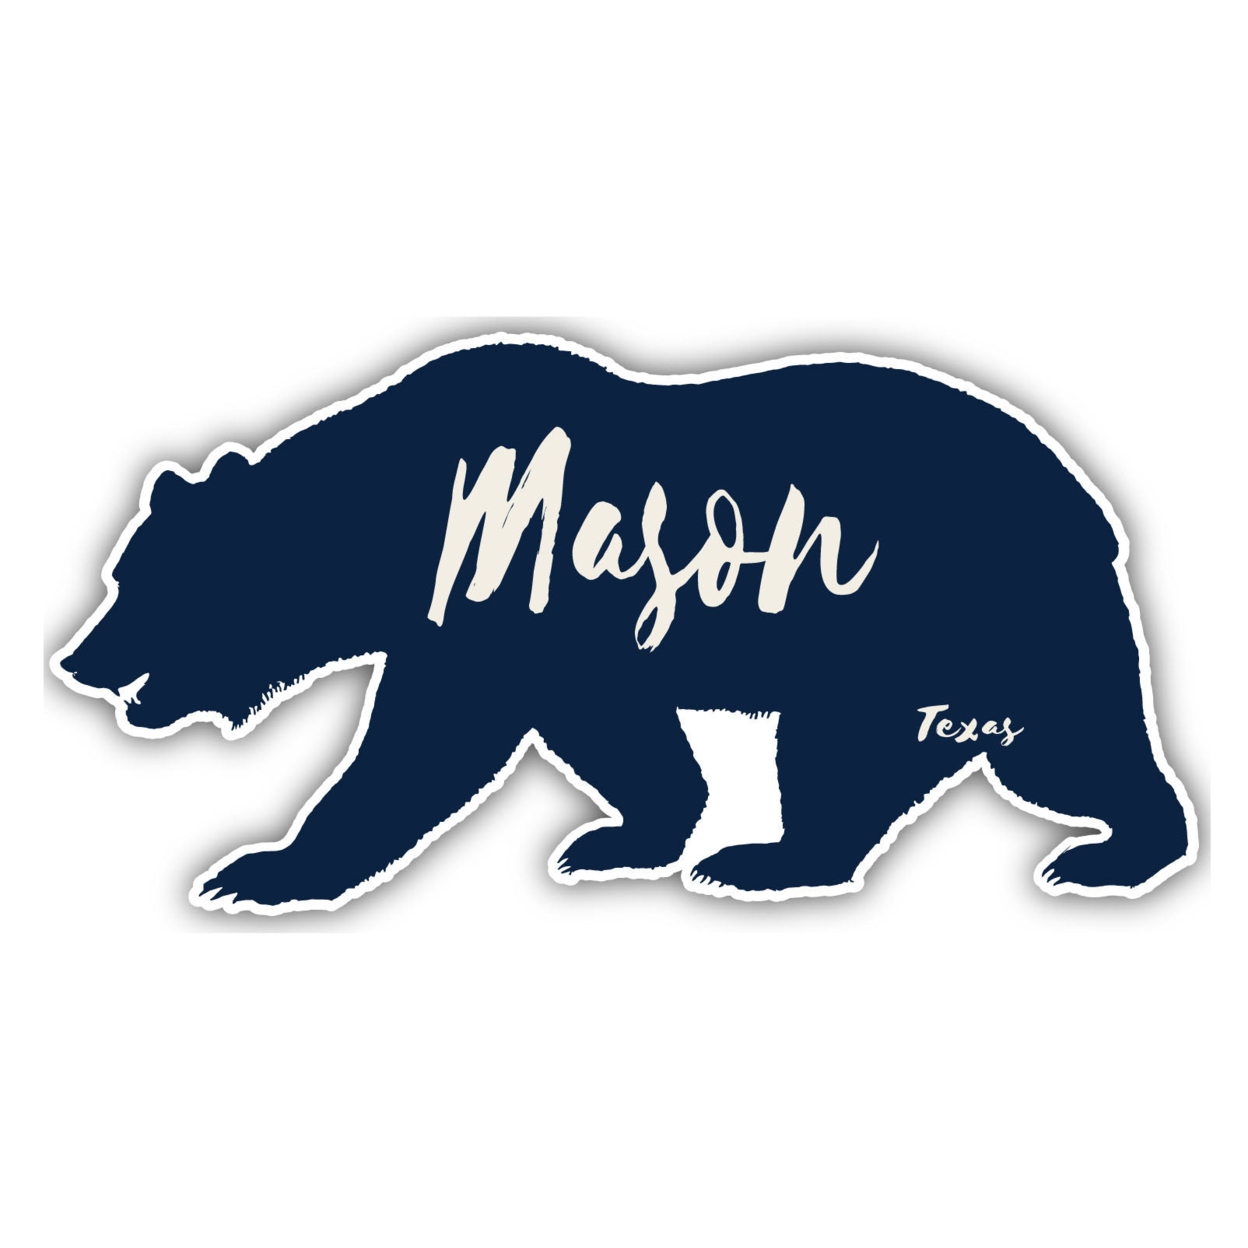 Mason Texas Souvenir Decorative Stickers (Choose Theme And Size) - 4-Inch, Bear